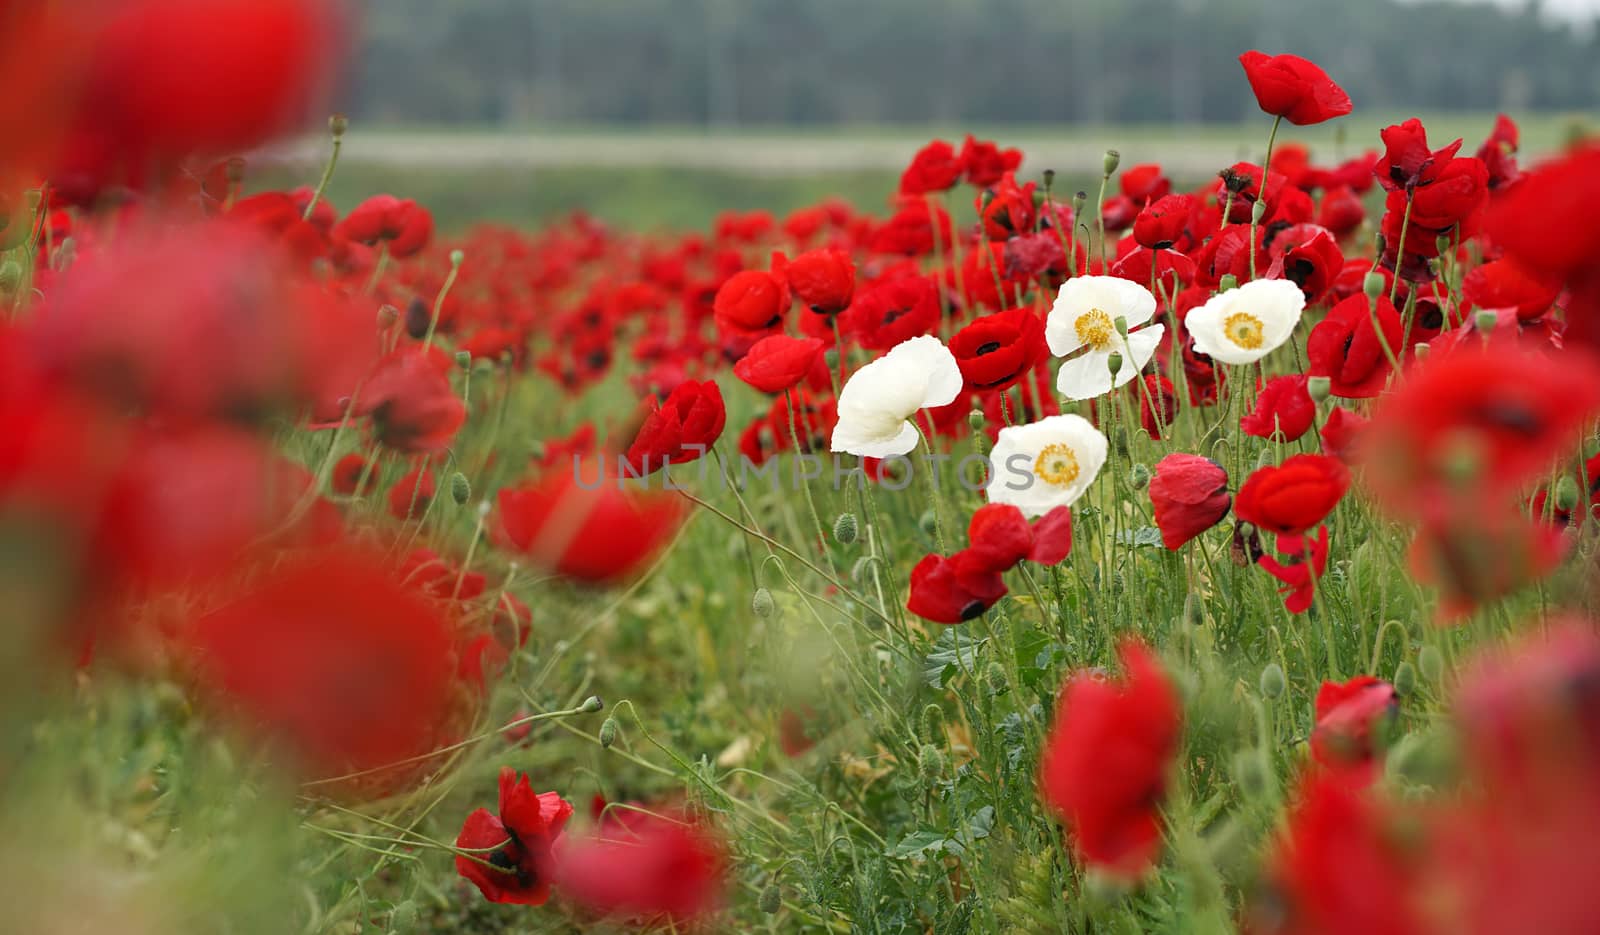 field of flowering red poppies by MegaArt